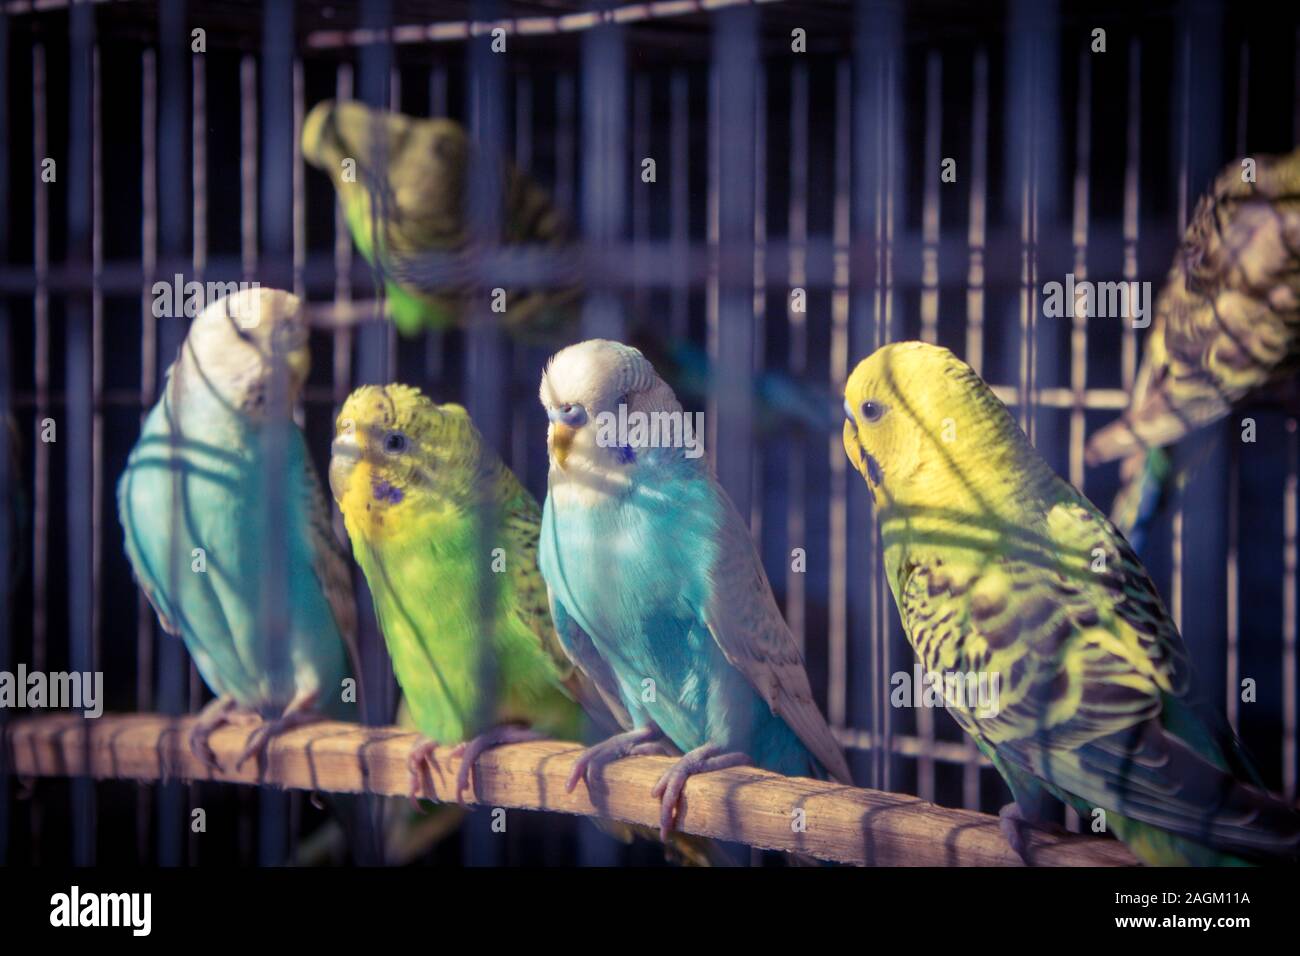 Portrait of a caged Budgie Parrots, selective focus Stock Photo